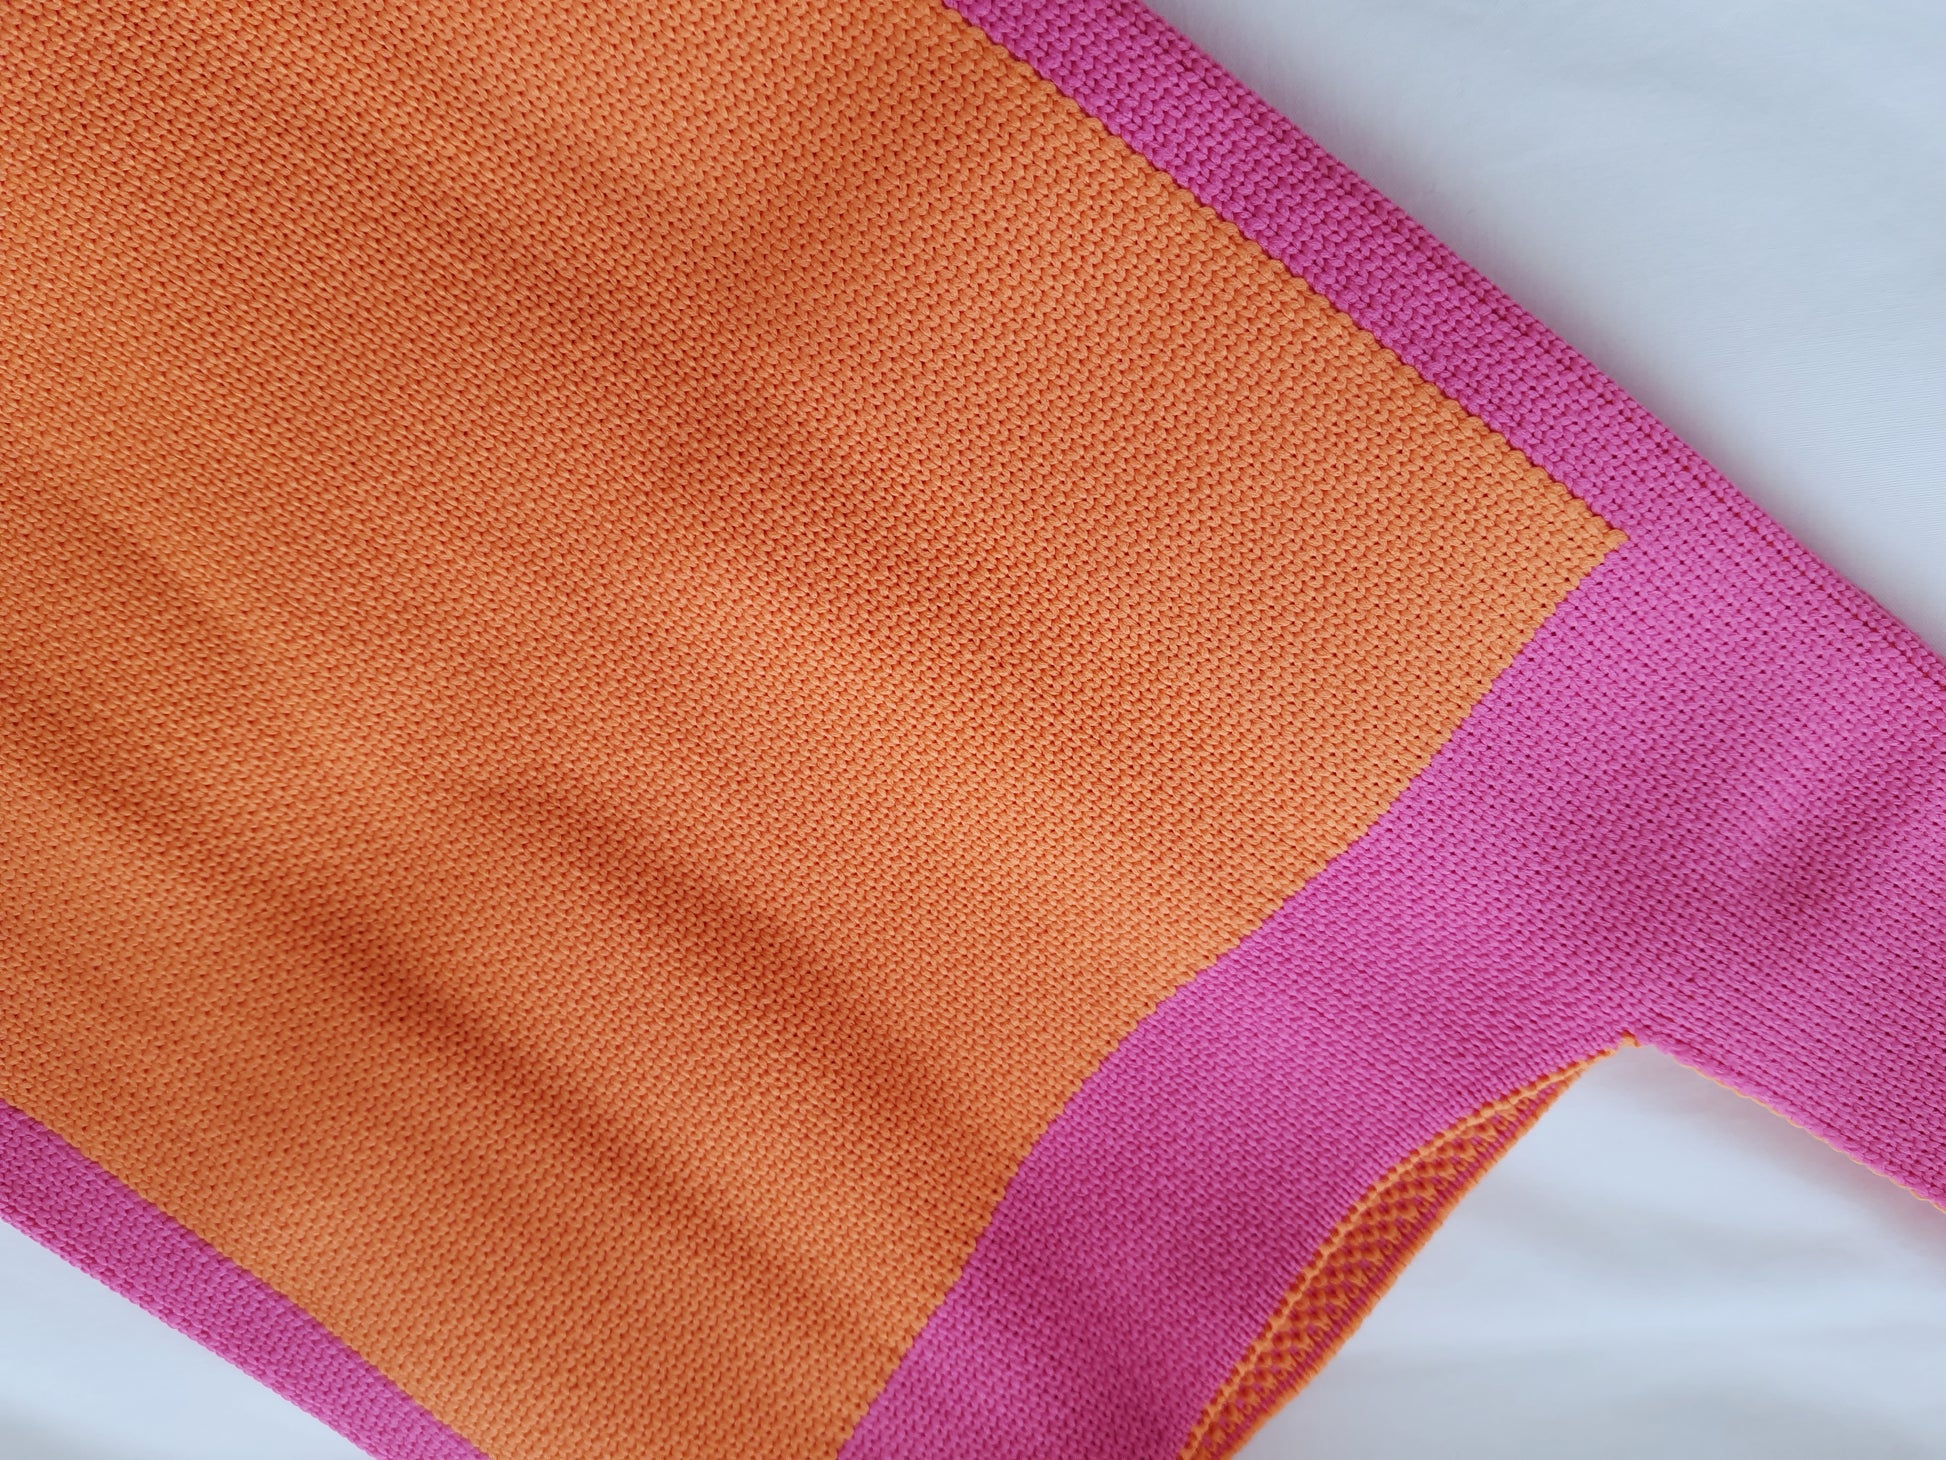 Accessories: Neon Pink & Orange Woven Bag - Thrift Happens 2